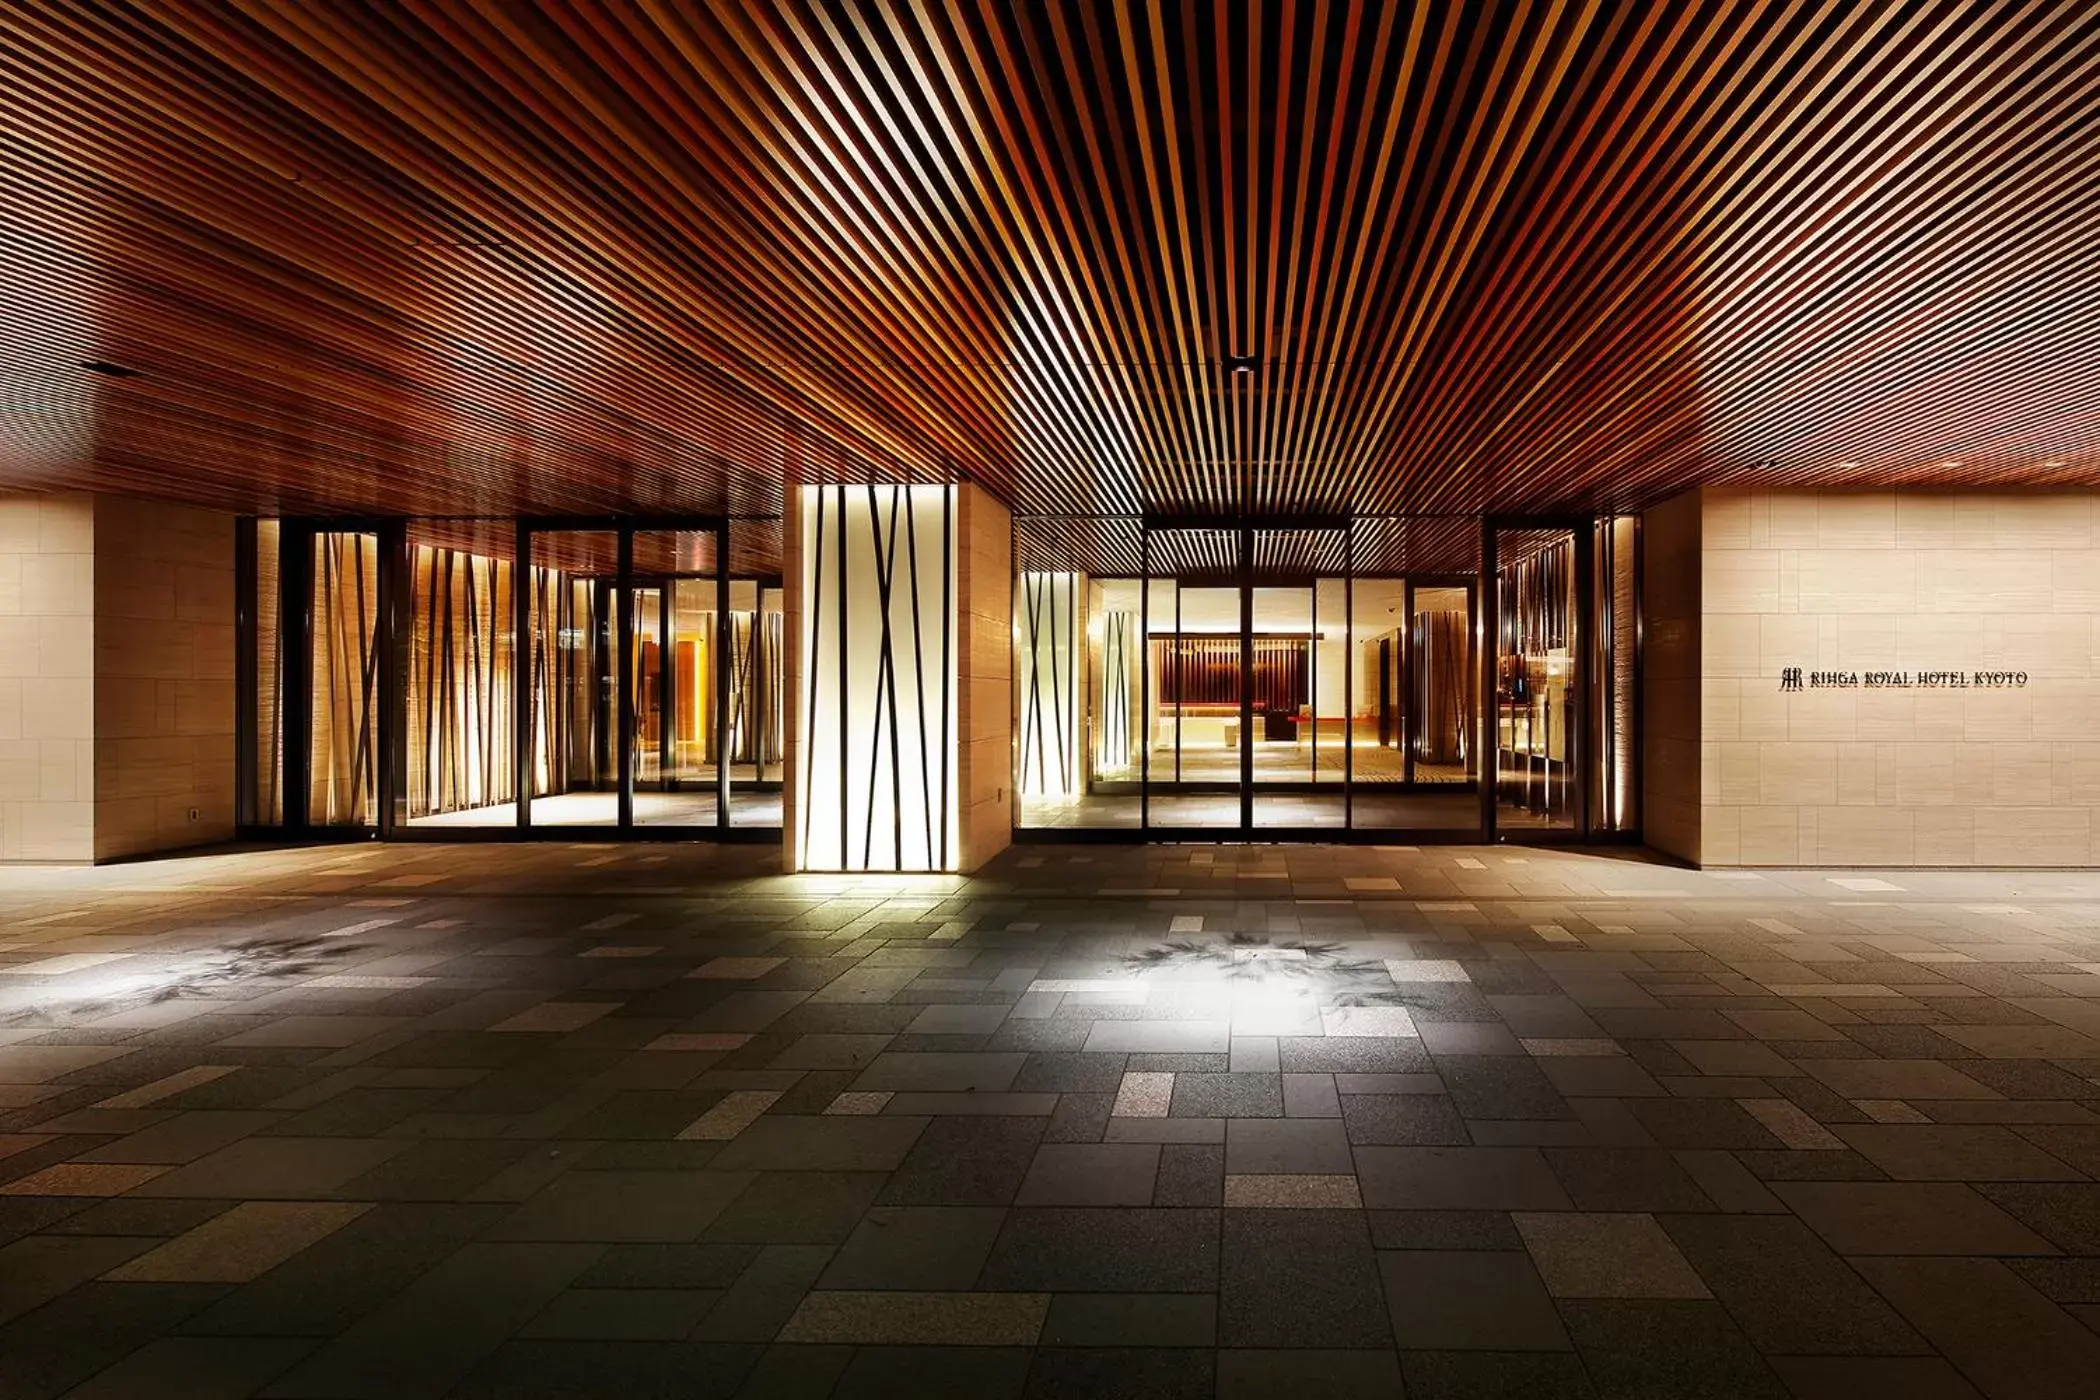 Facade/entrance in RIHGA Royal Hotel Kyoto